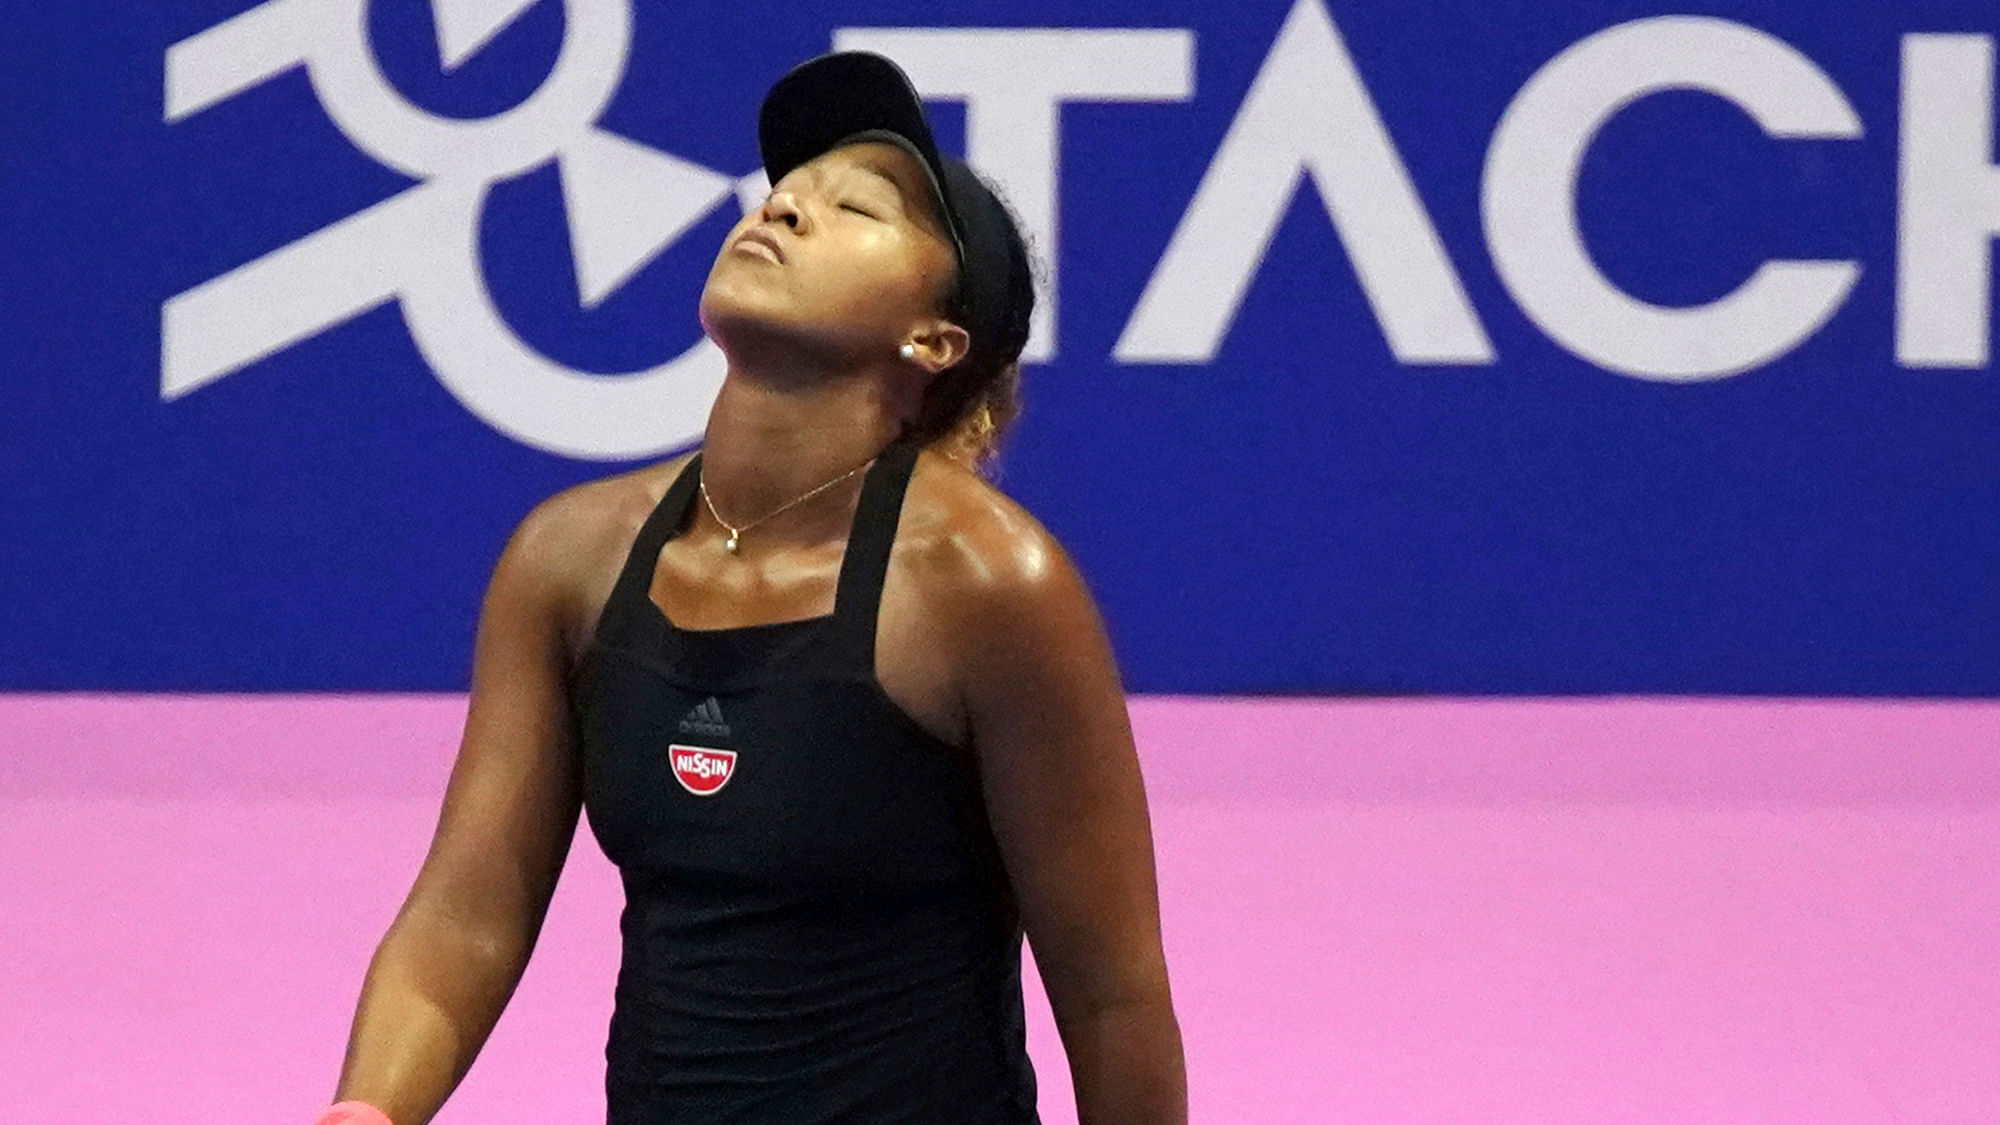 Naomi Osaka’s dominant run came to end in a 6-4, 6-4 loss to fourth-seeded Karolina Pliskova.